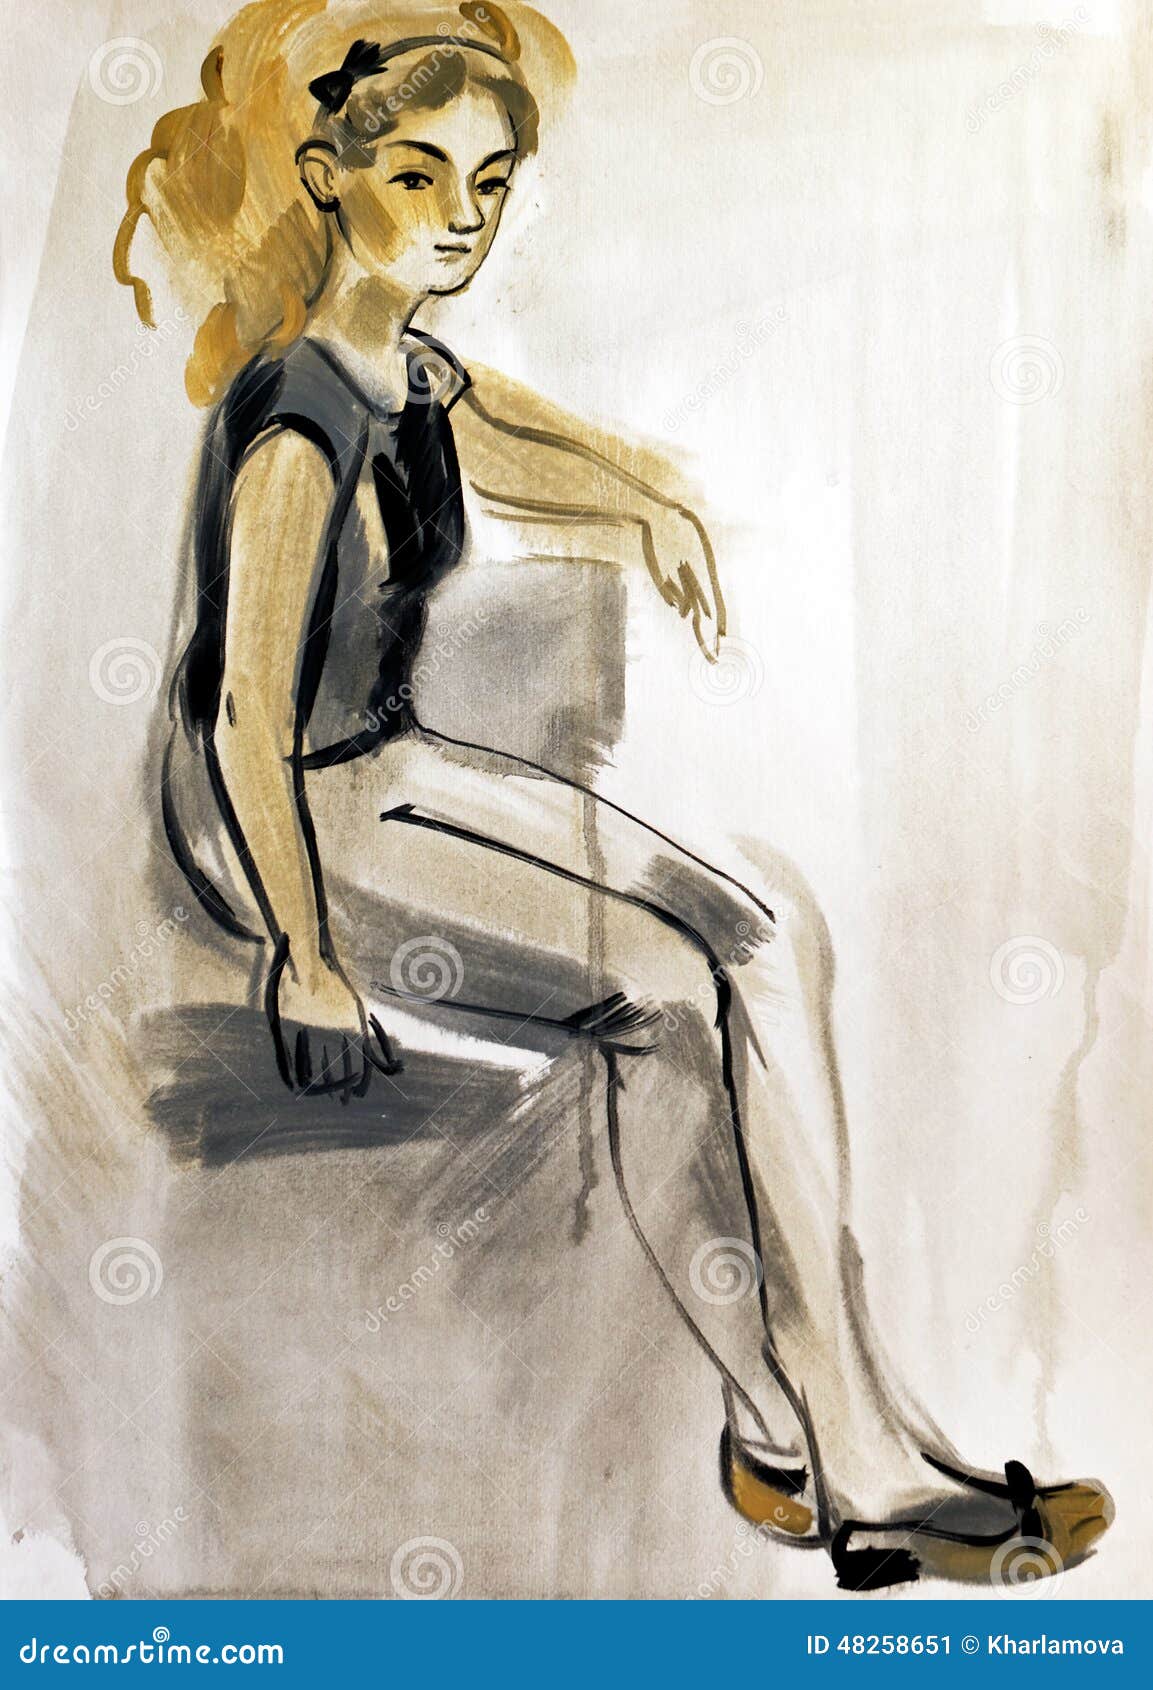 Sketch of a female figure stock illustration. Illustration of model